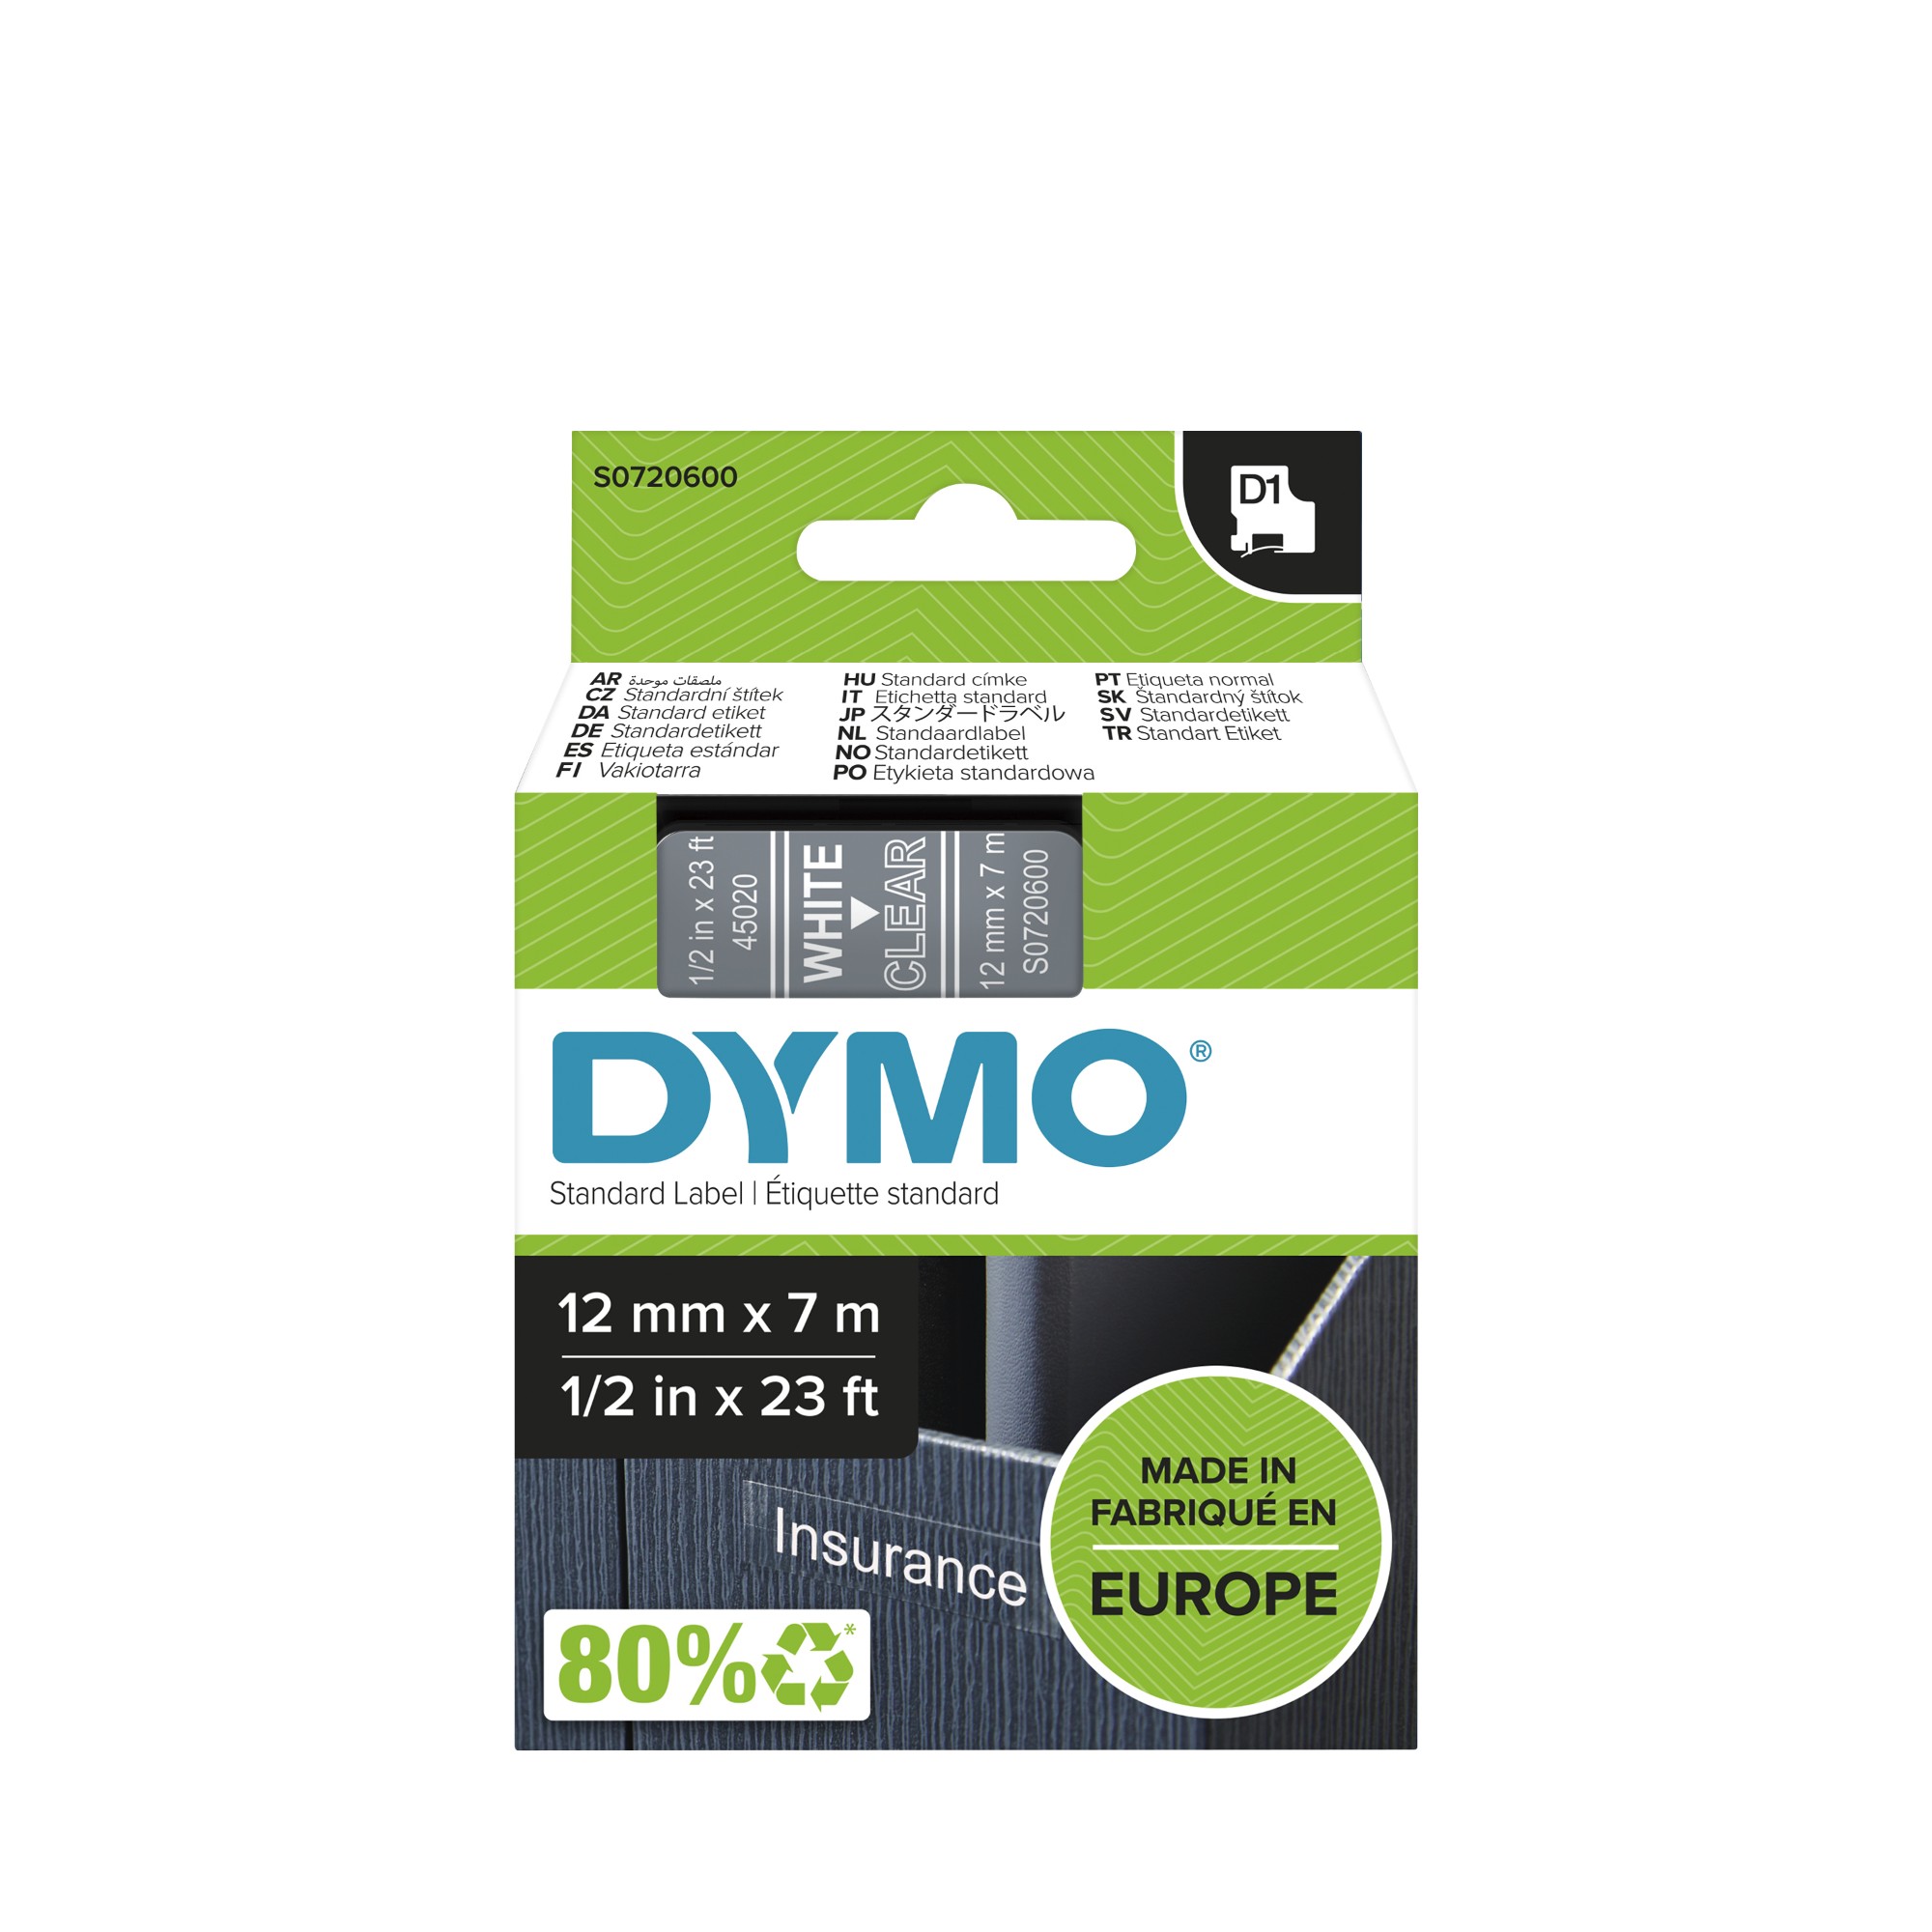 DYMO D1 - Standardpolyesteretiketter - Vit på transparent - 12mm x 7m